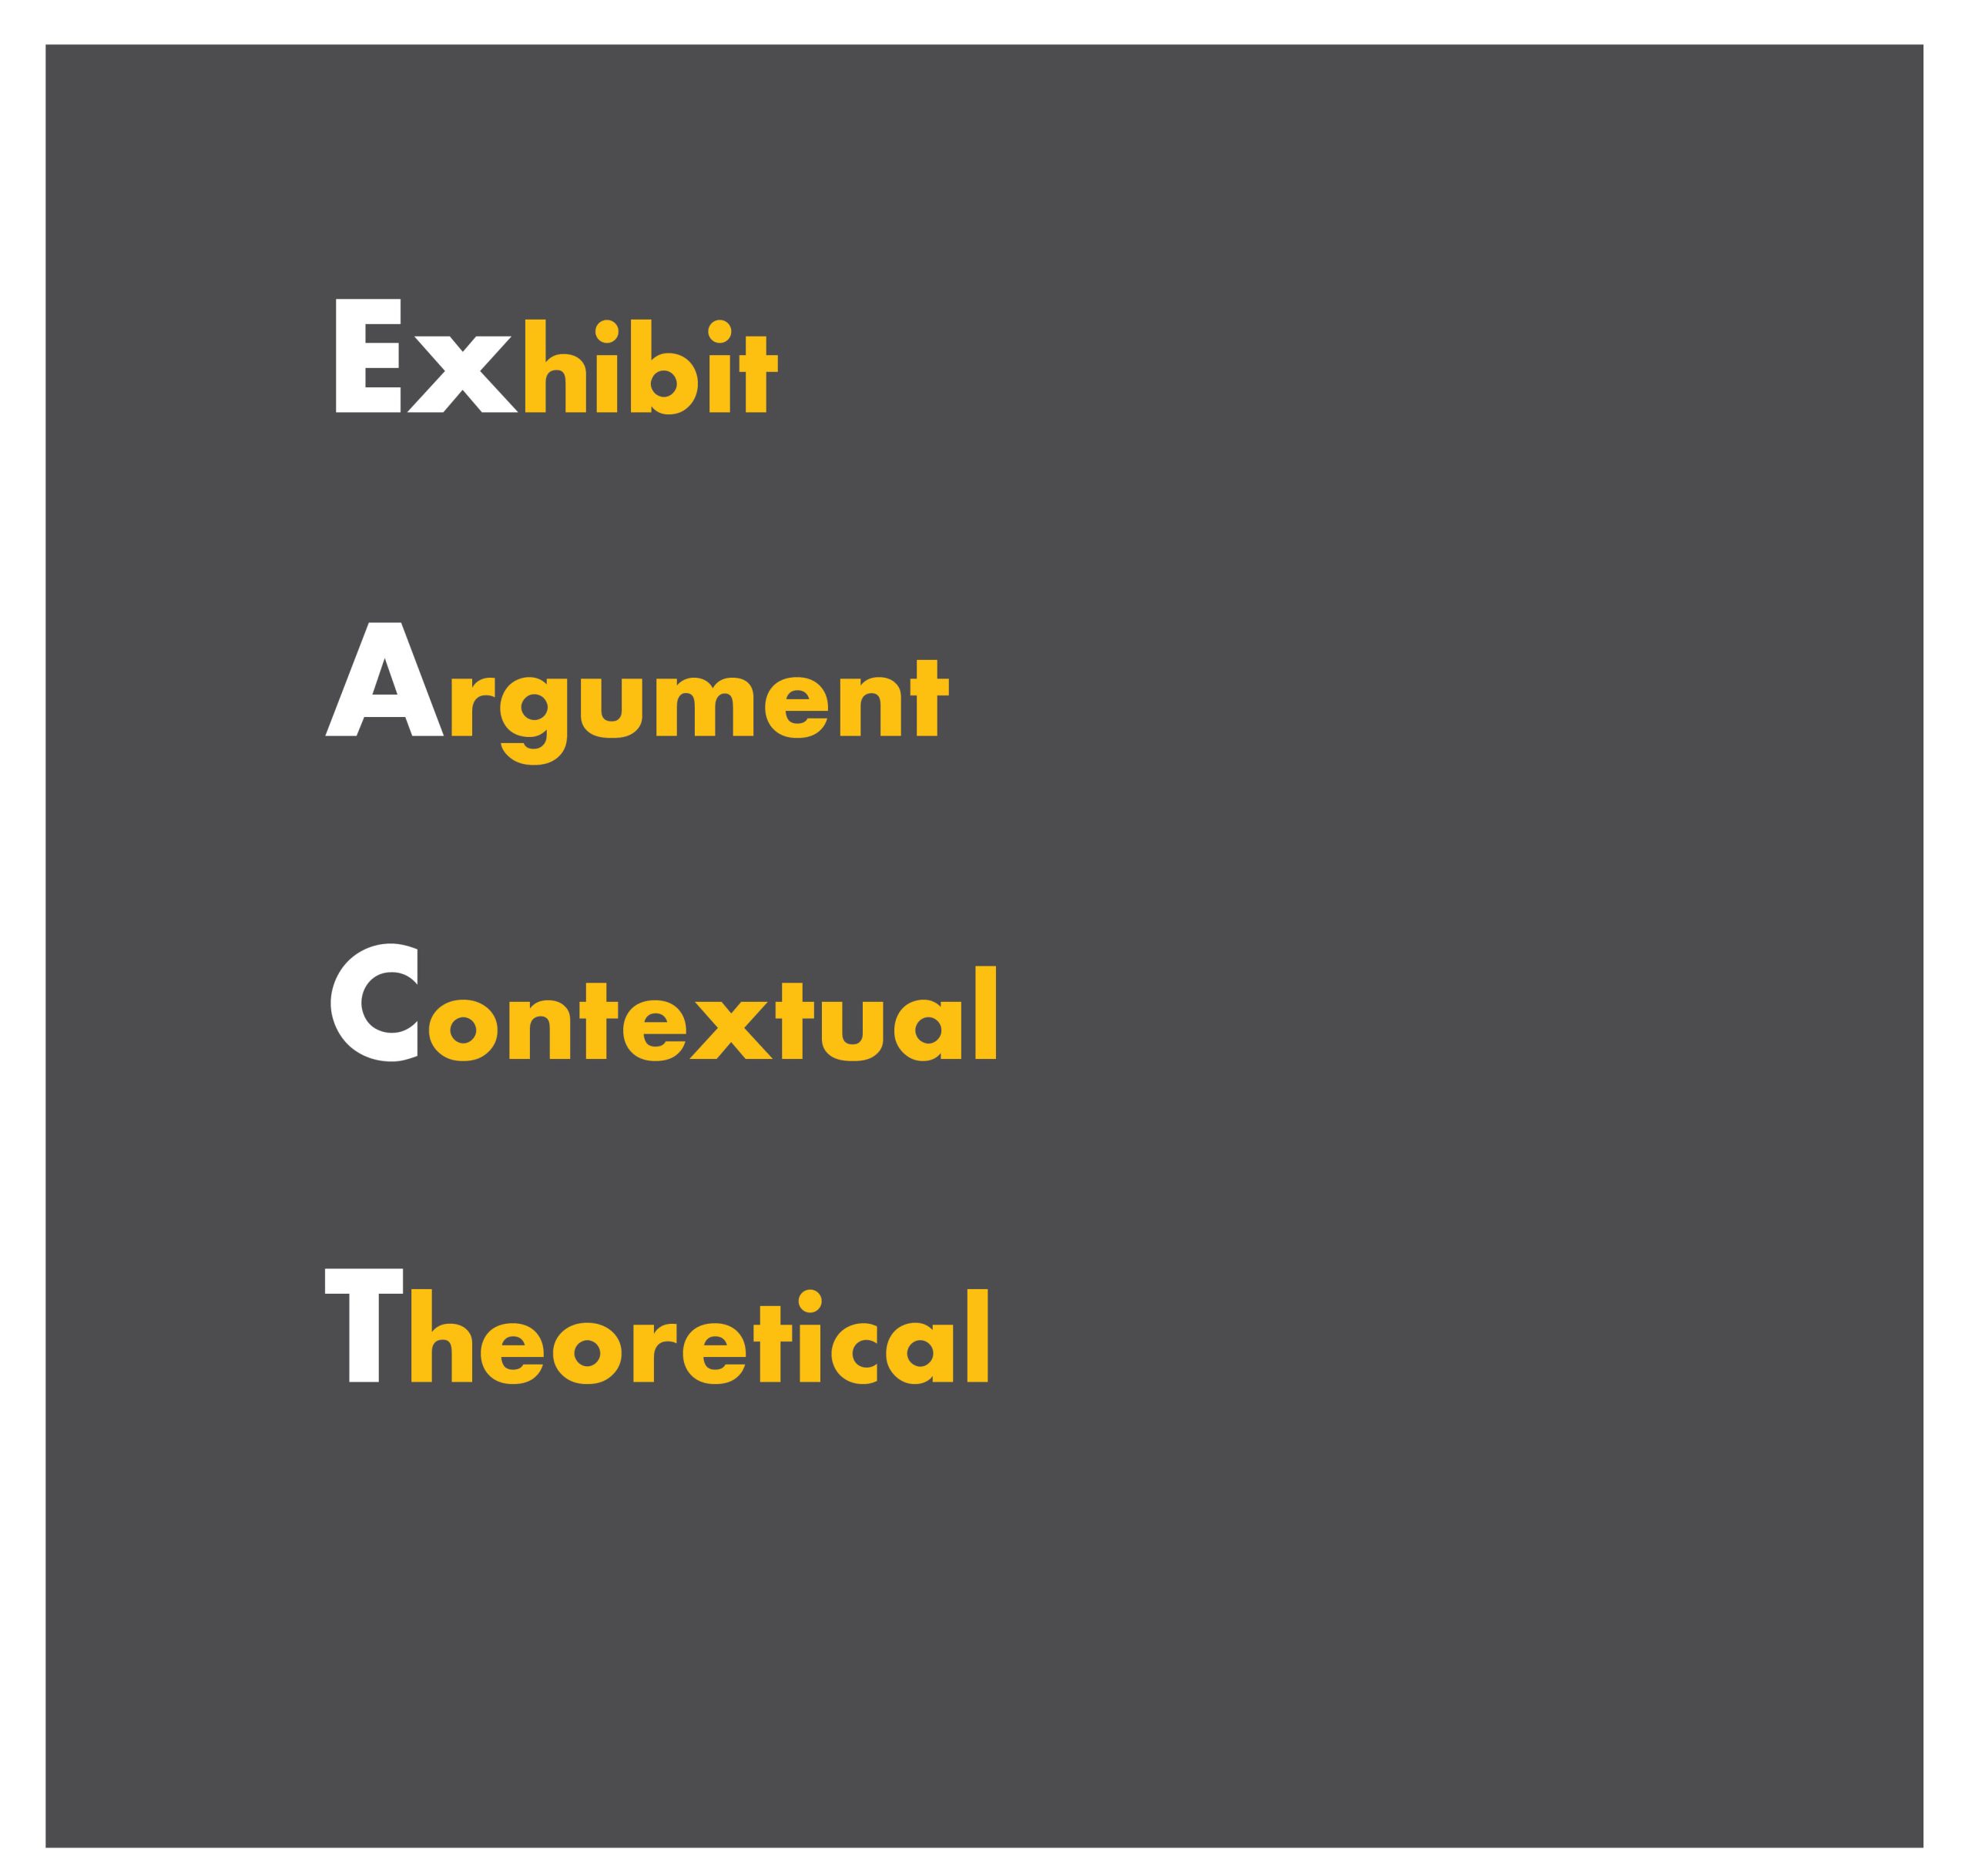 Exact Source Use: Exhibit, Argument, Contextual, Theoretical. The Ex in exhibit, A in argument, C in contextual, and T in theoretical are emphasized to make the acronym Exact.